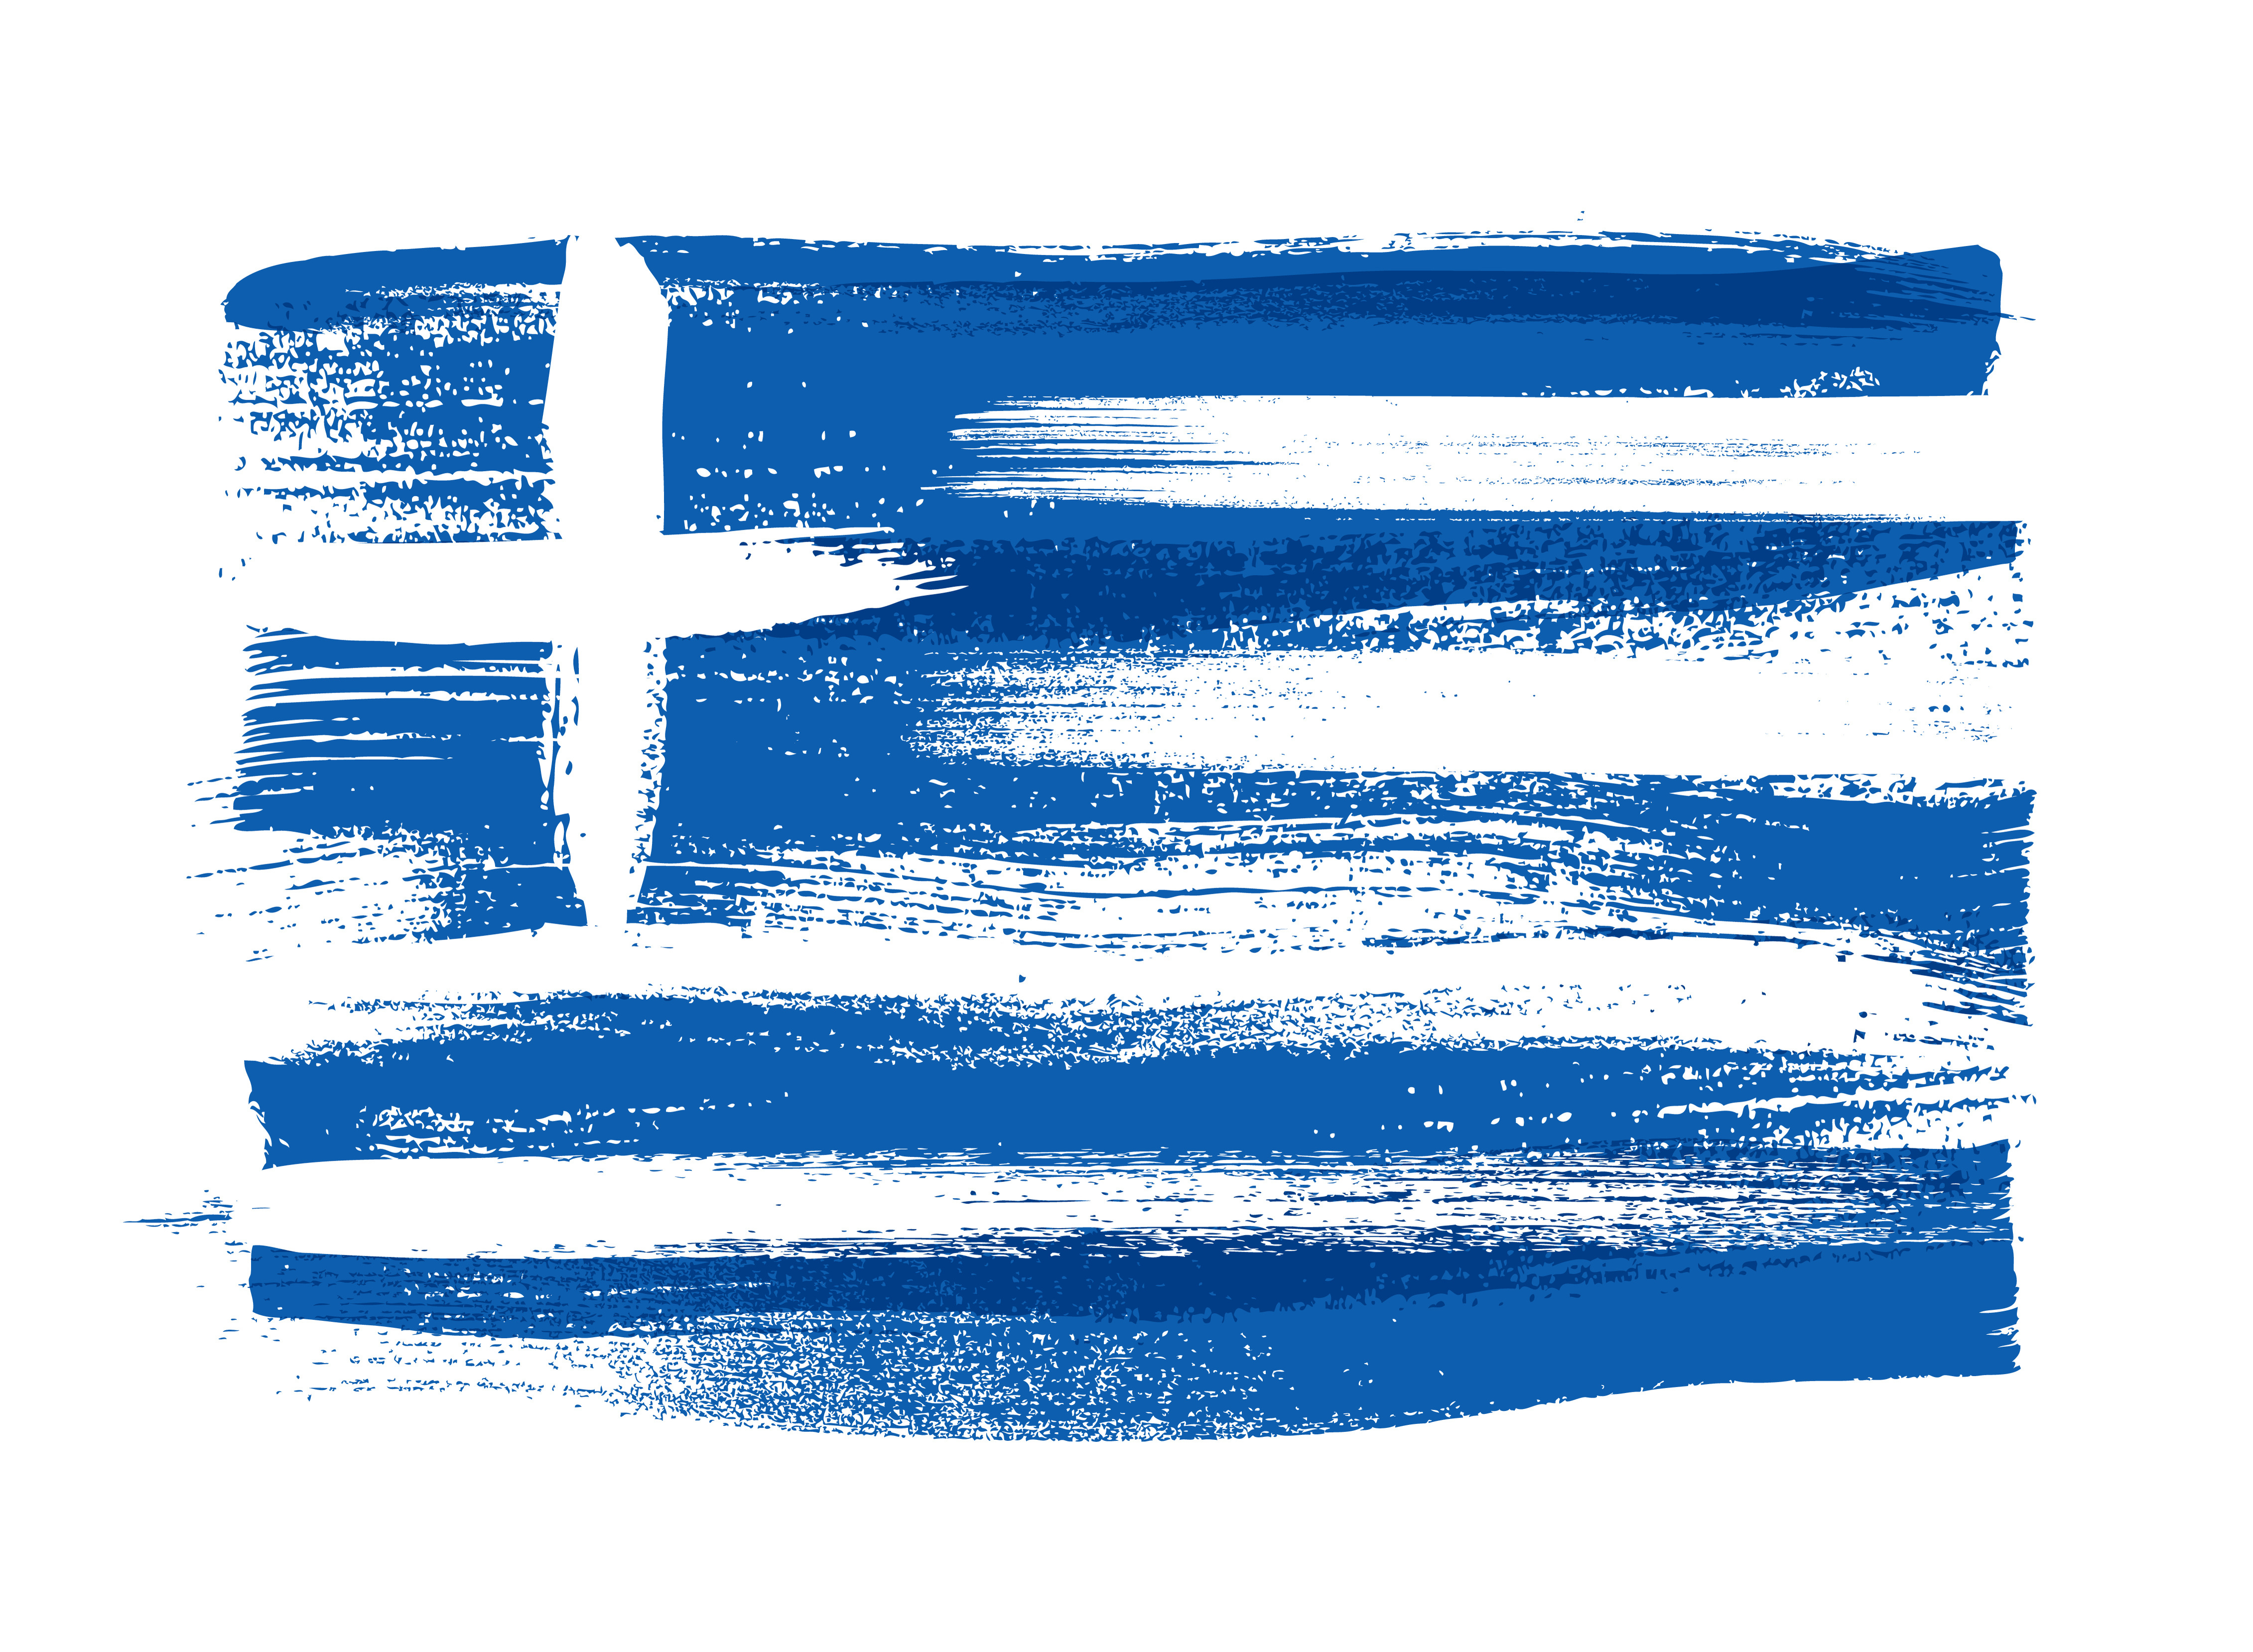 Griechenland Flagge